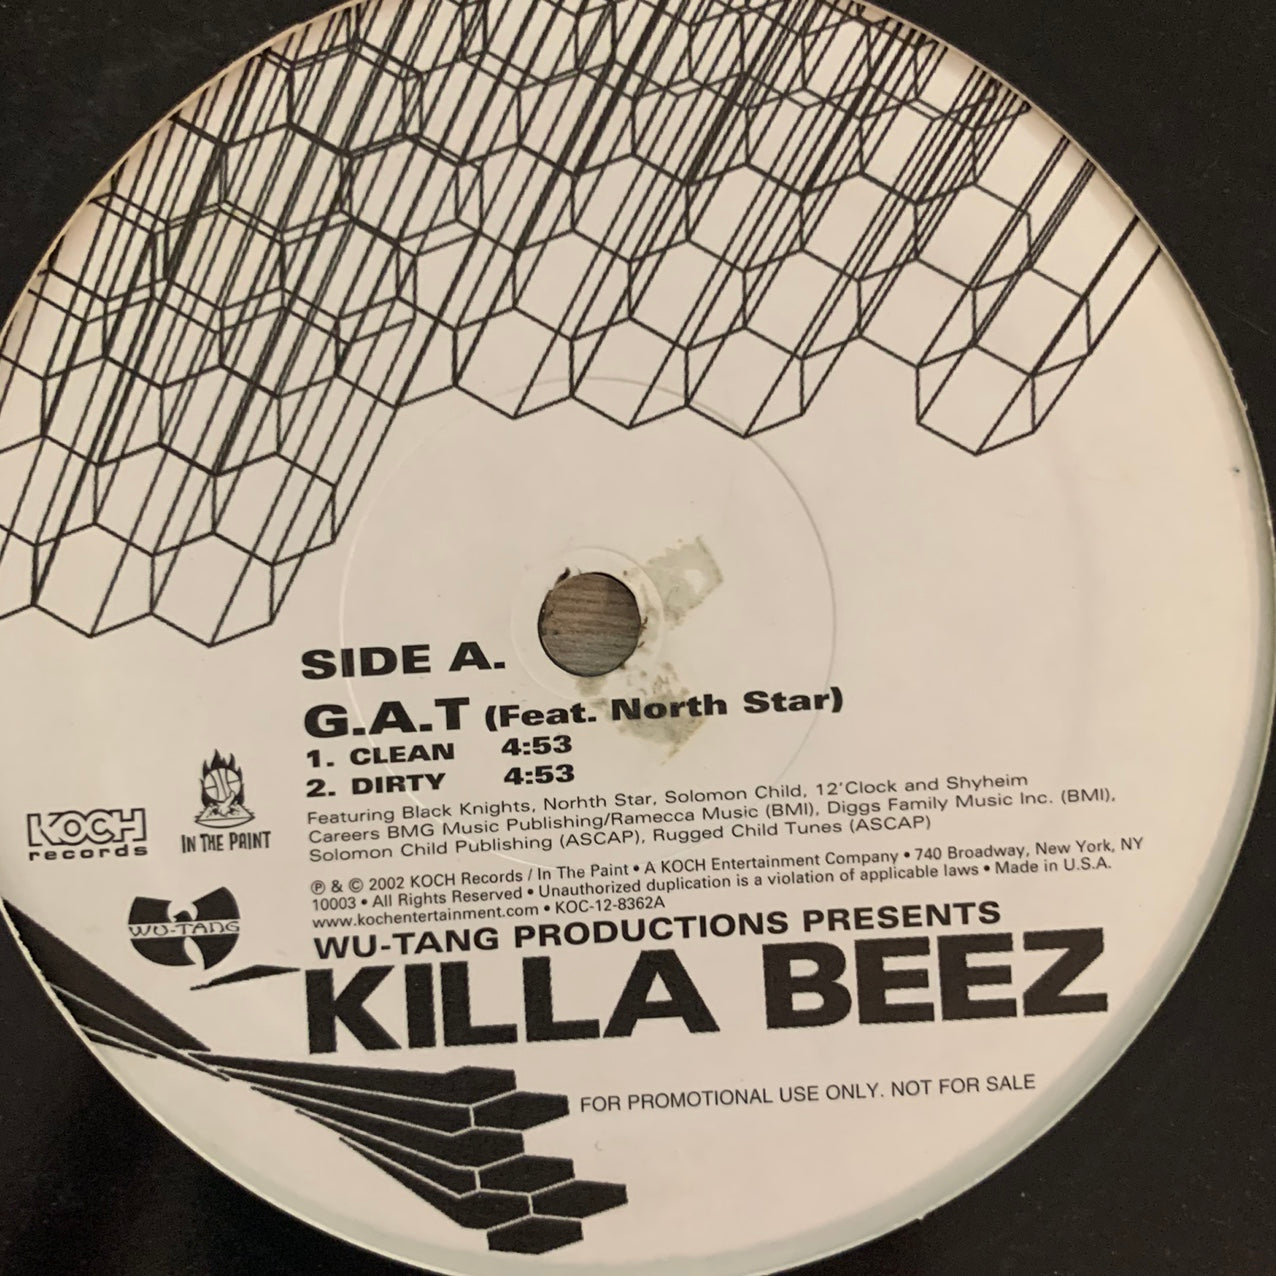 Wu Tang Clan presents Killa Beez “G.A.T.” 3 Track 12inch Vinyl